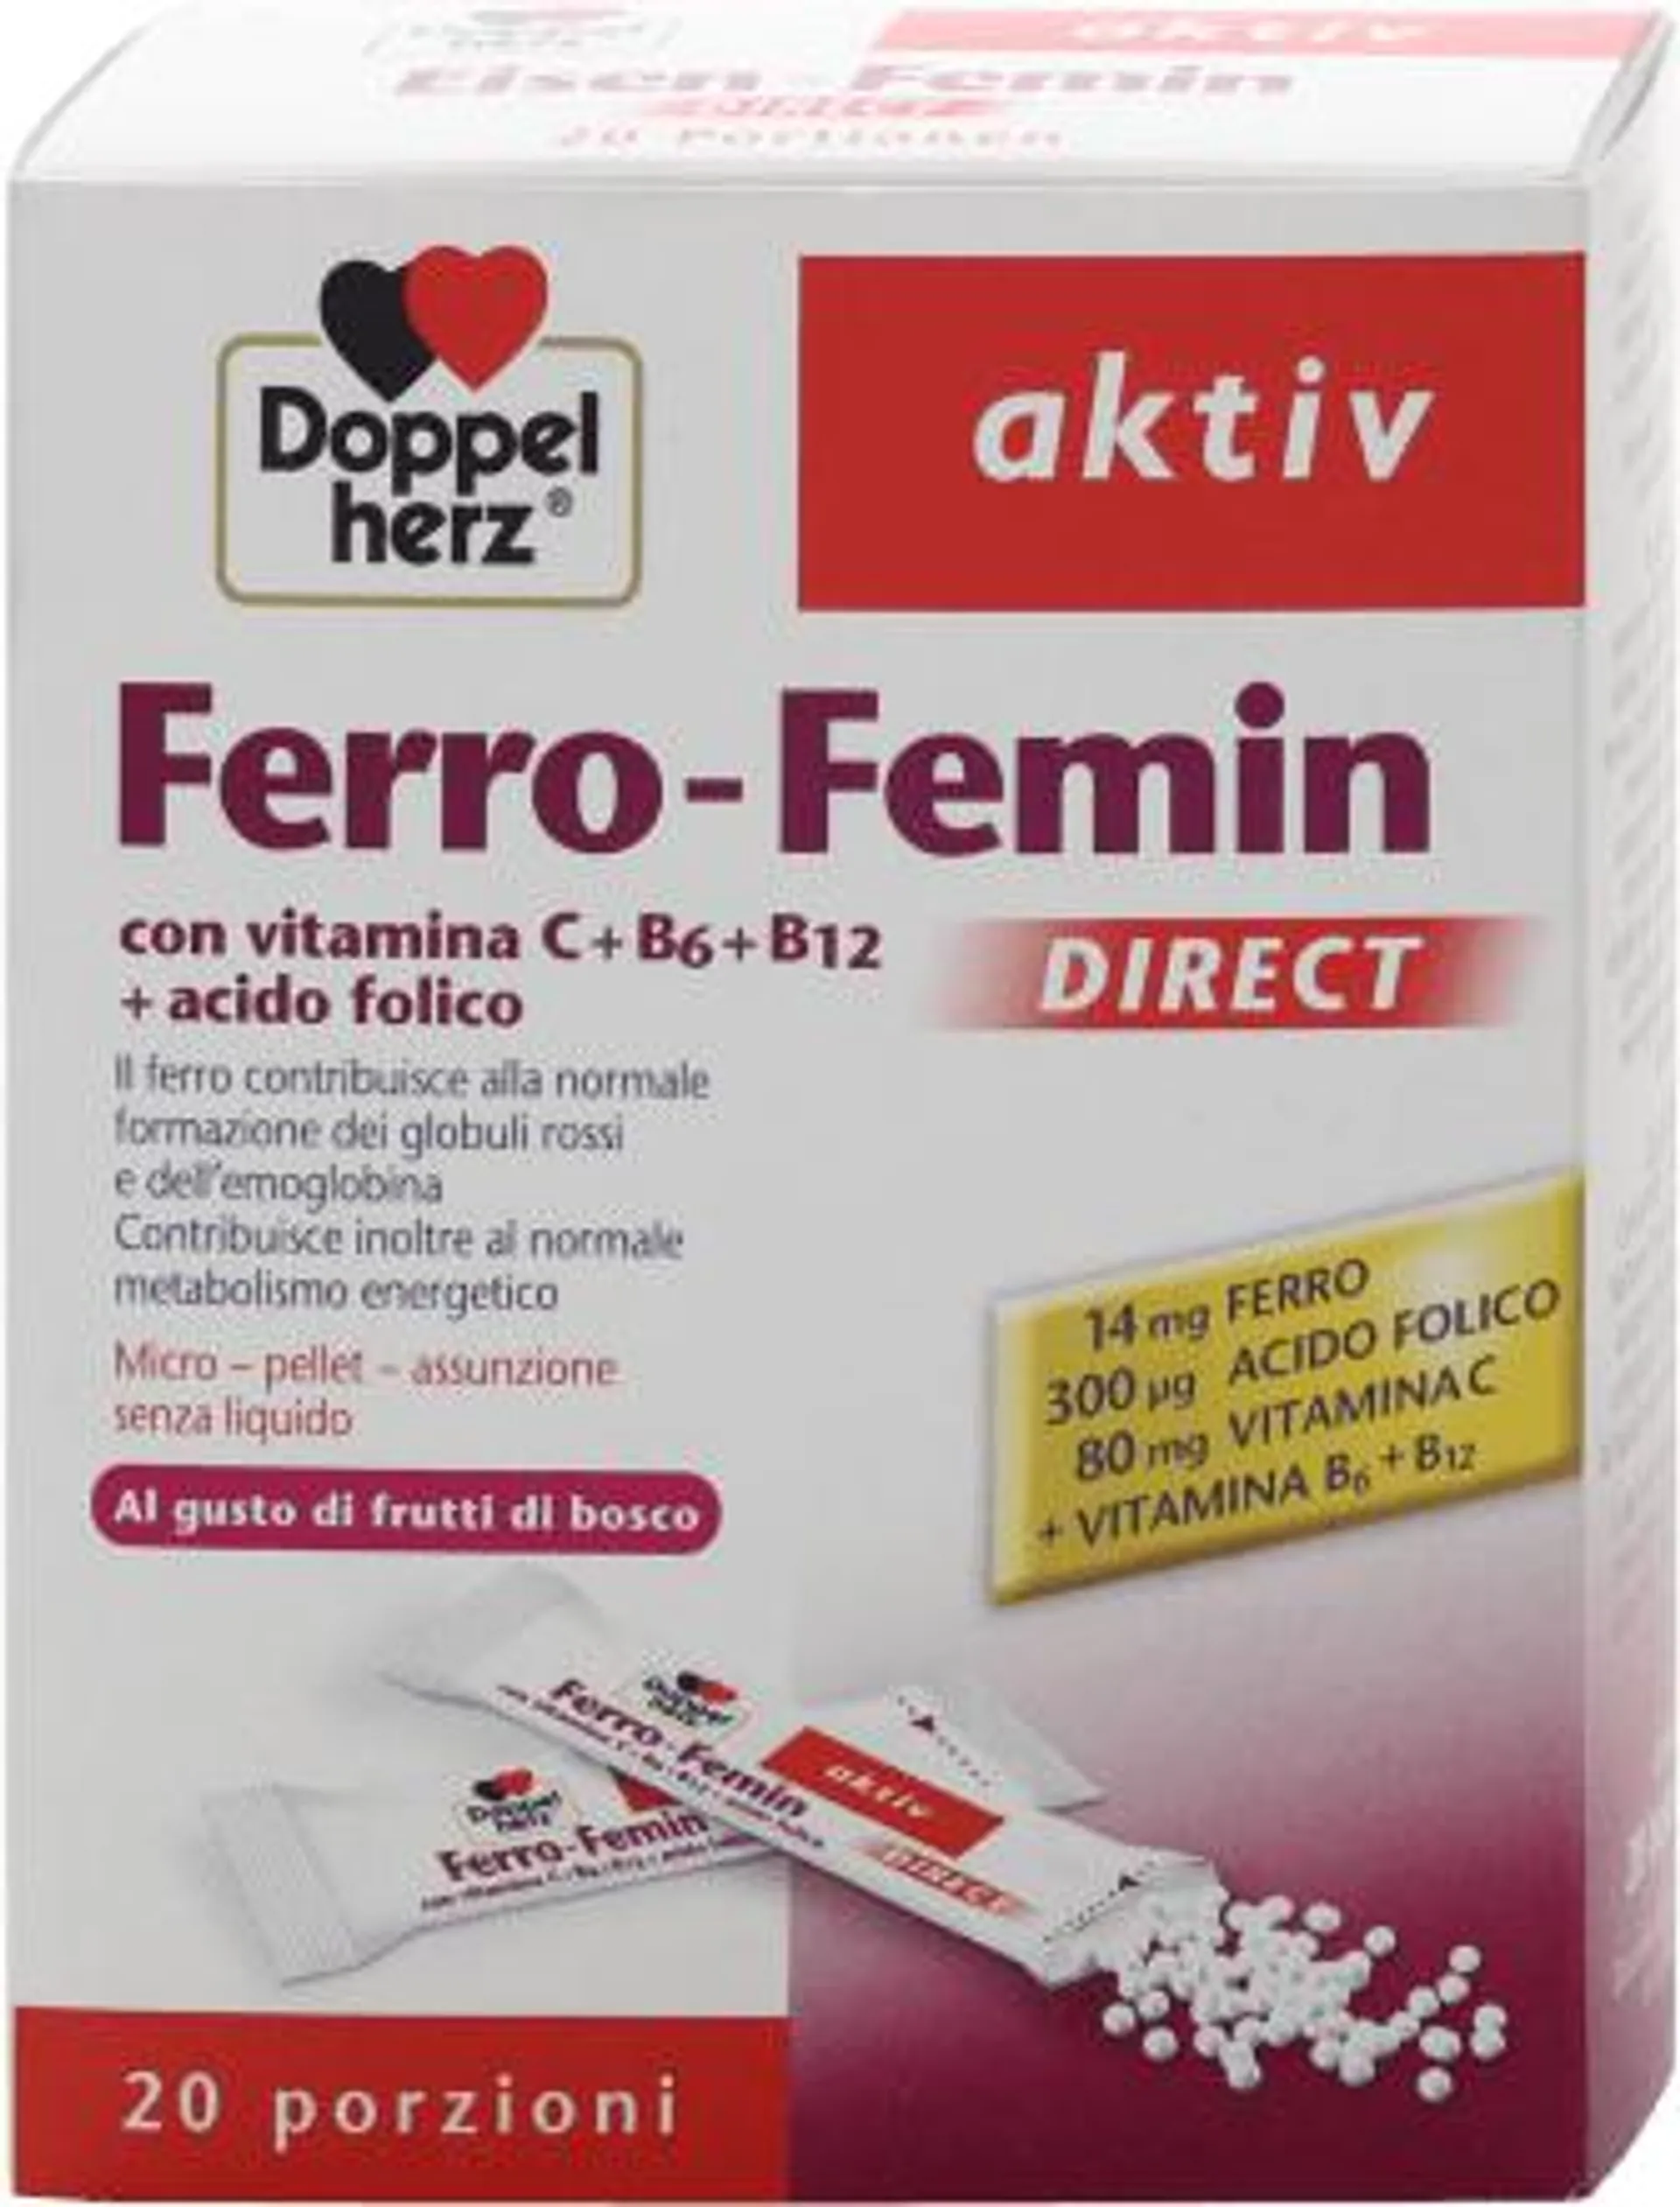 Ferro - Femin DIRECT aktiv, 20 pz